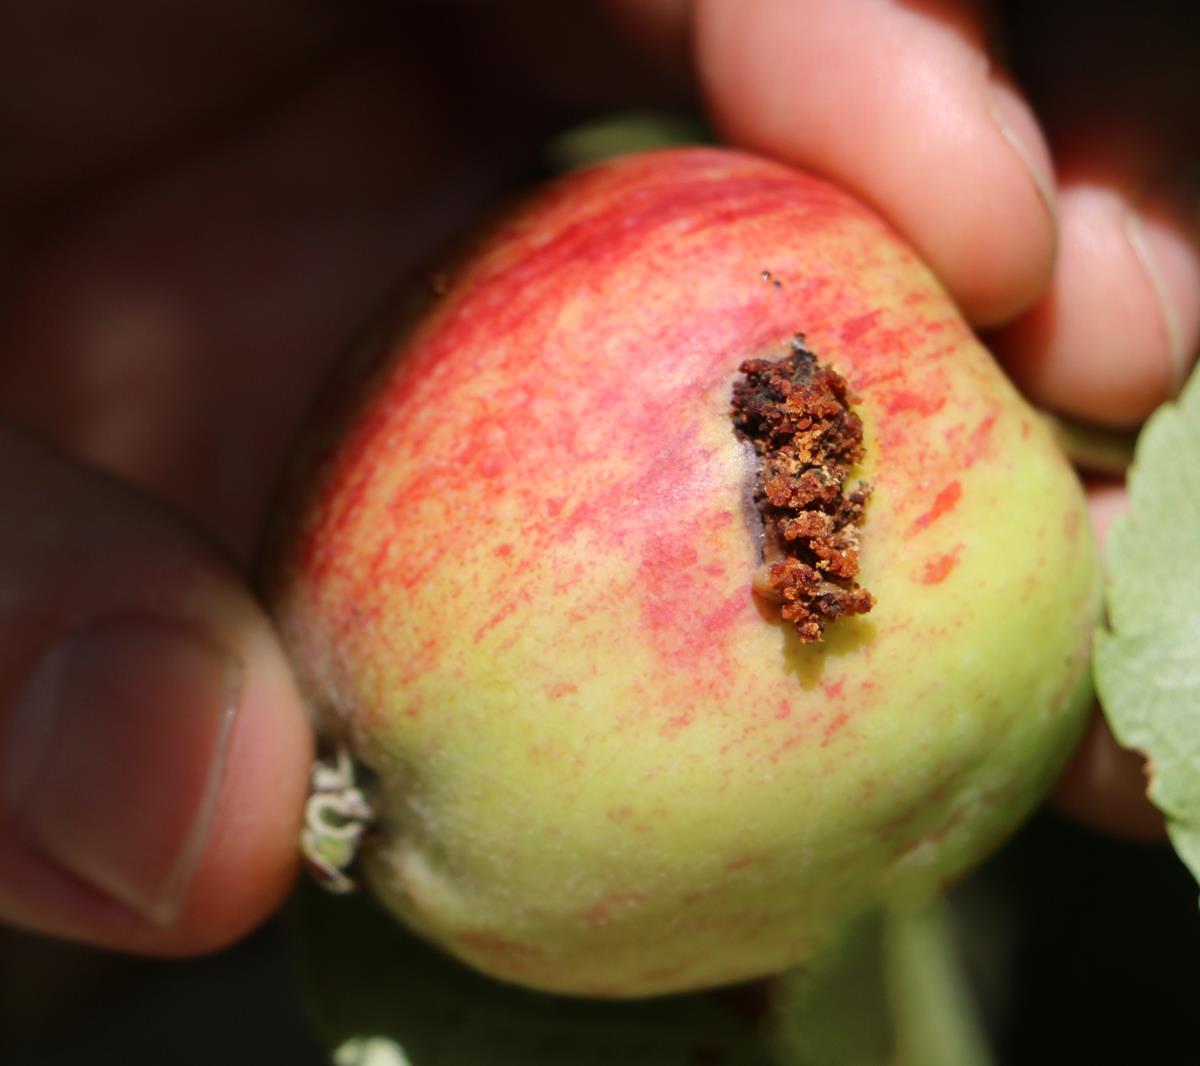 Apple with codling moth larvae frass